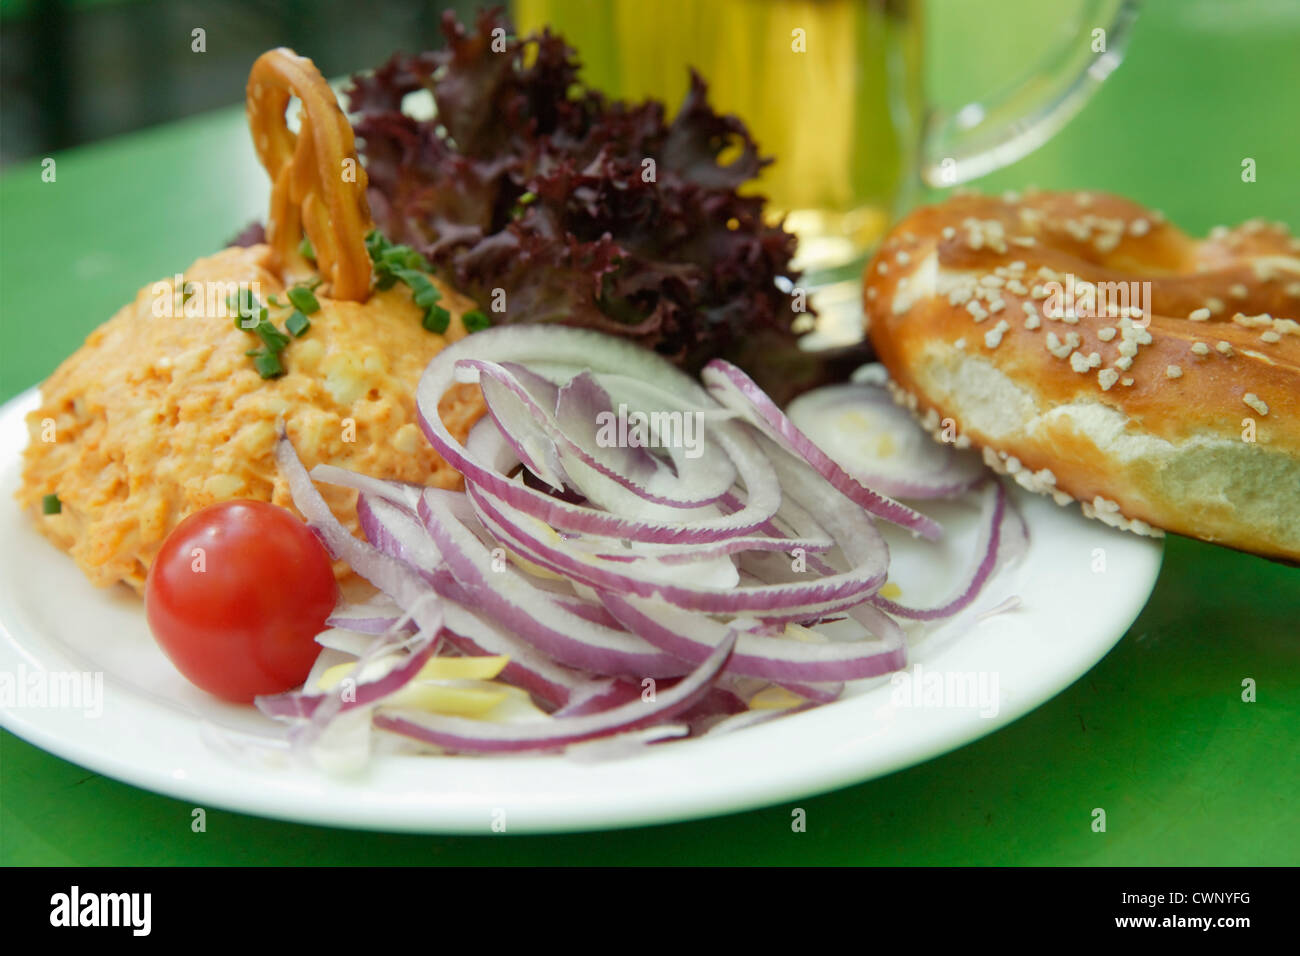 Germany, Bavaria, Munich, Vegetarian dish with mug of beer, close up Stock Photo